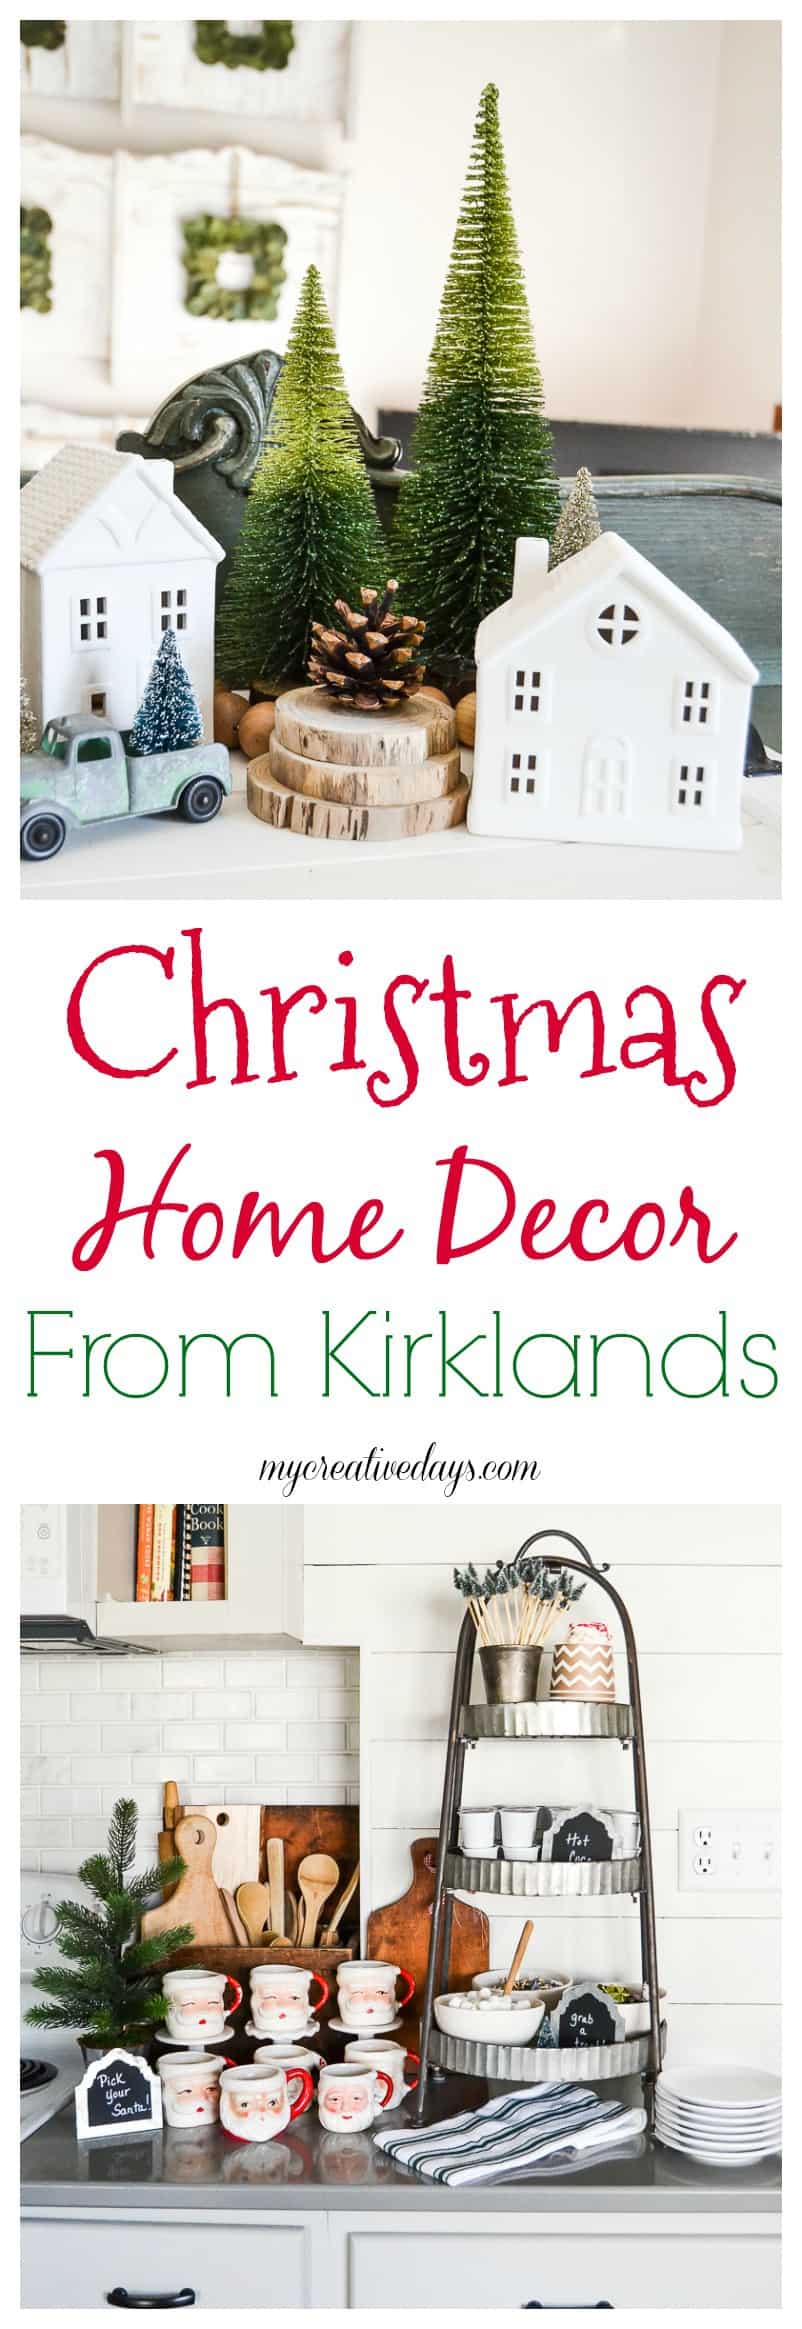 Christmas Home Decor From Kirklands My Creative Days